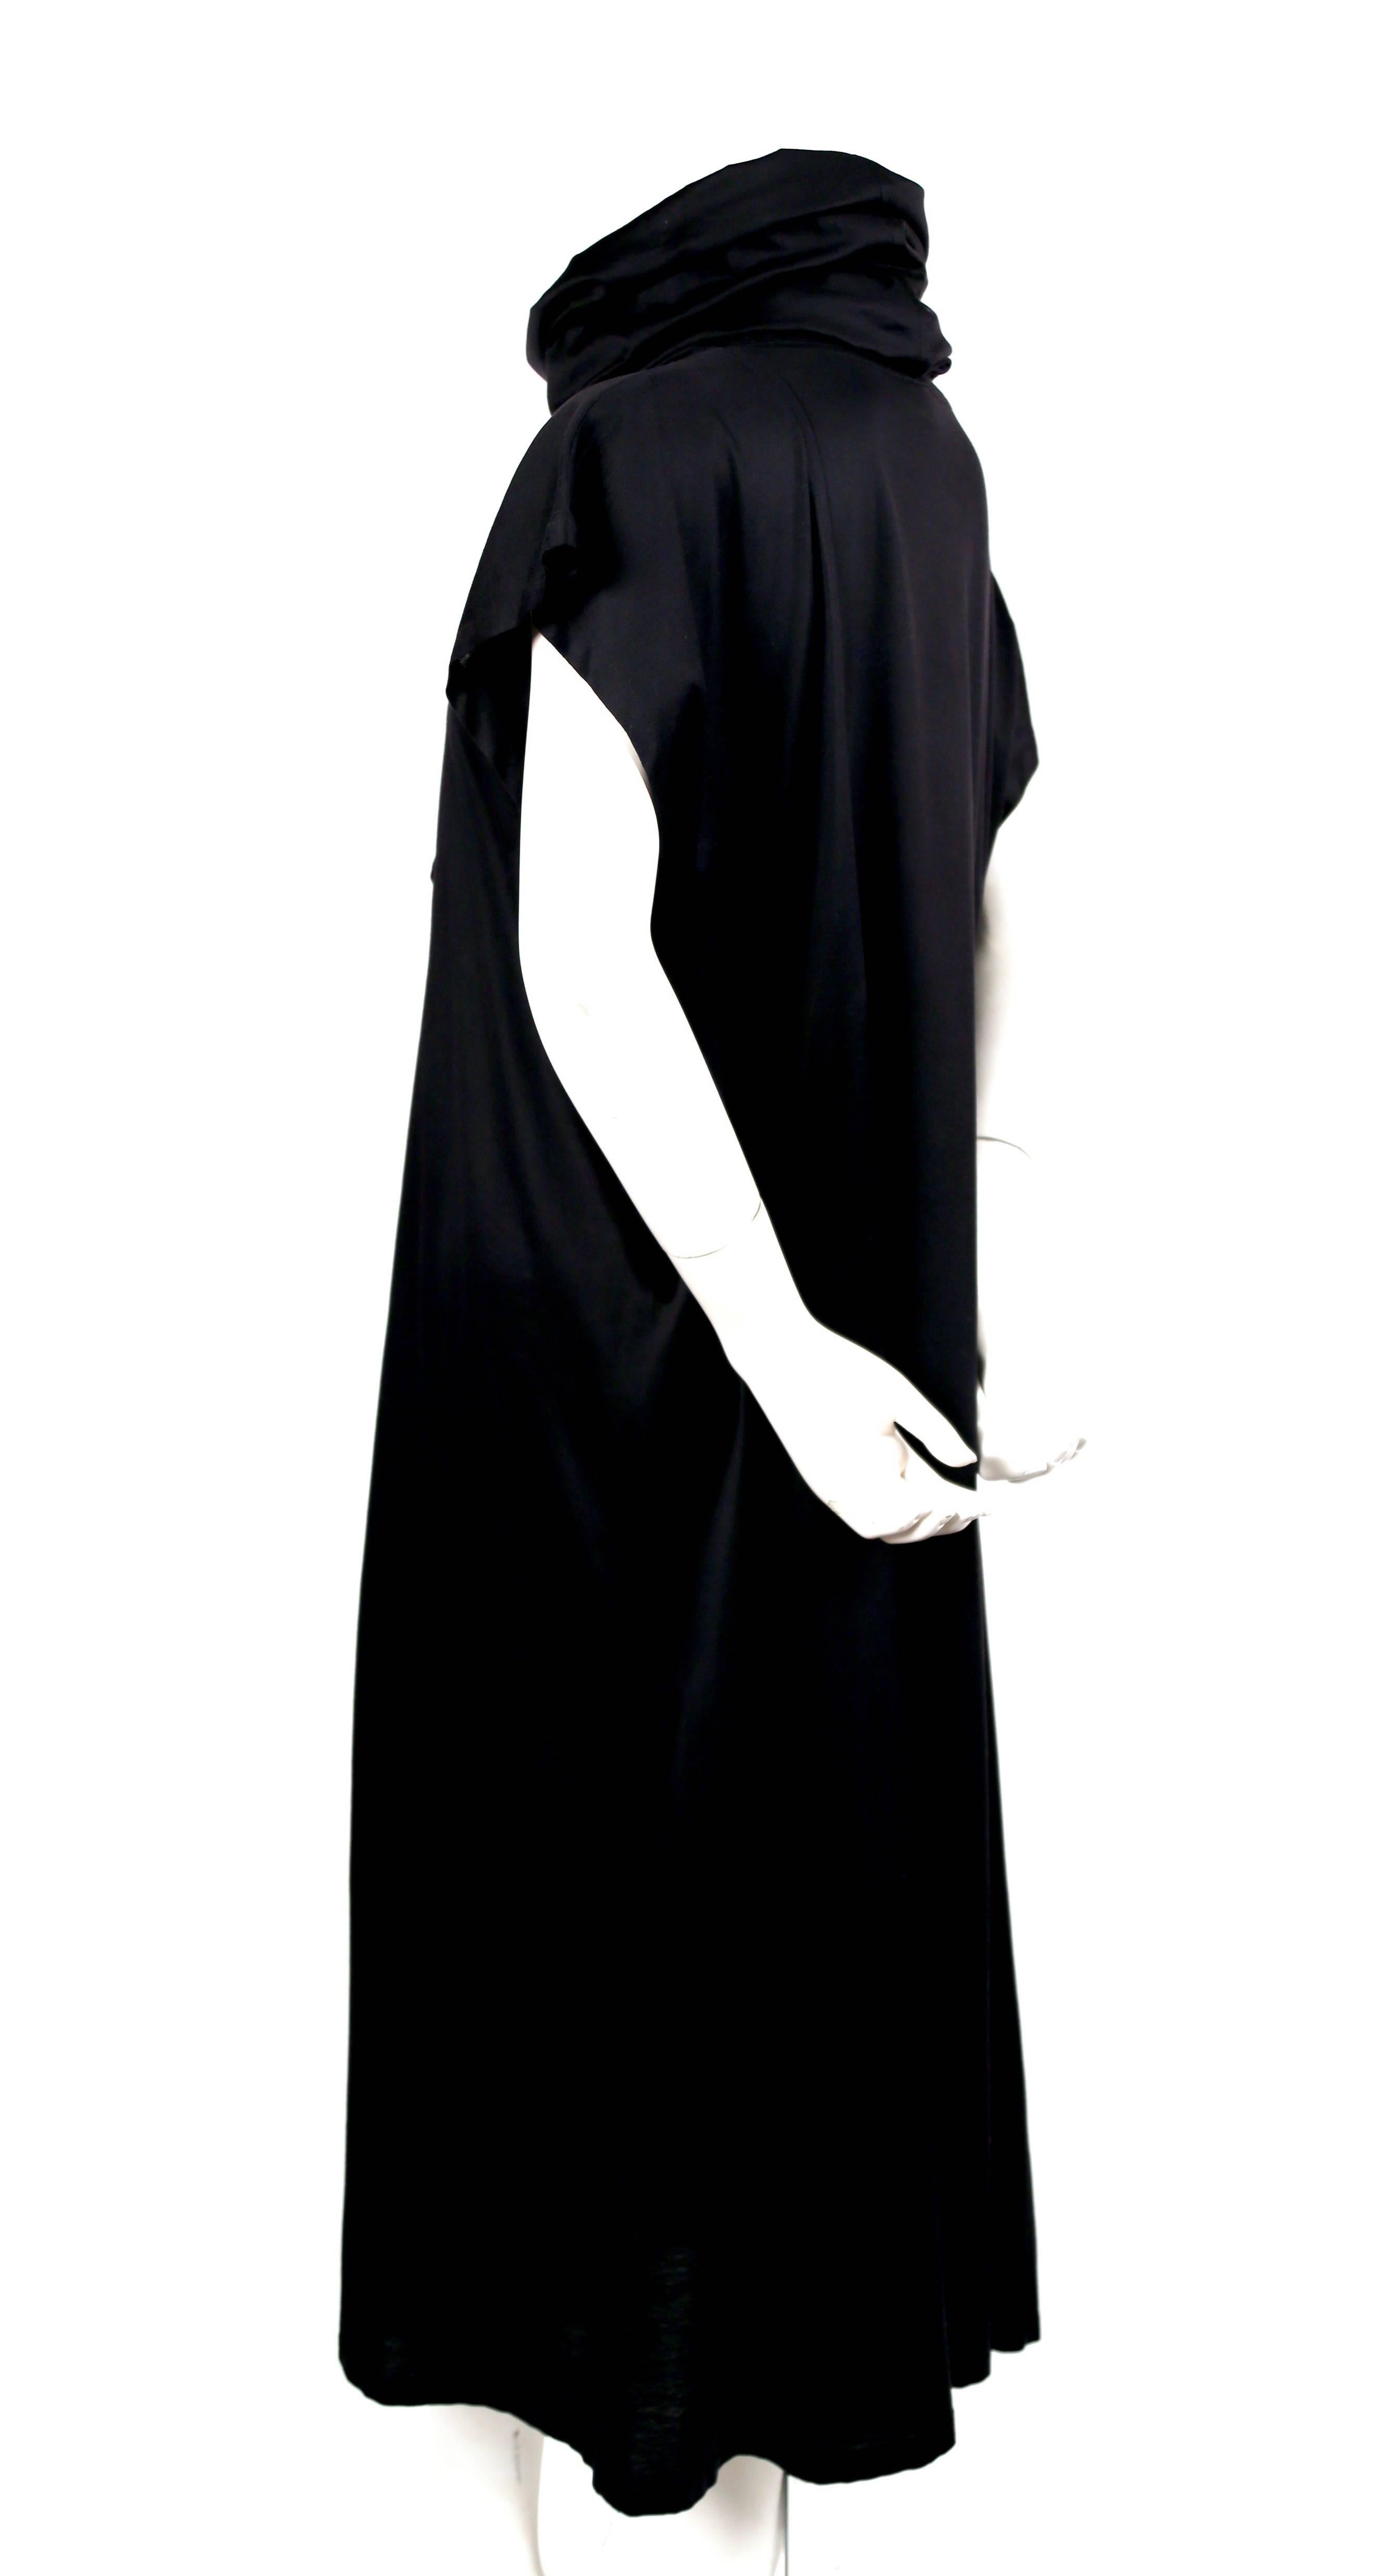 Black 1985 KENZO fine gauge cotton jersey runway dress with pocket